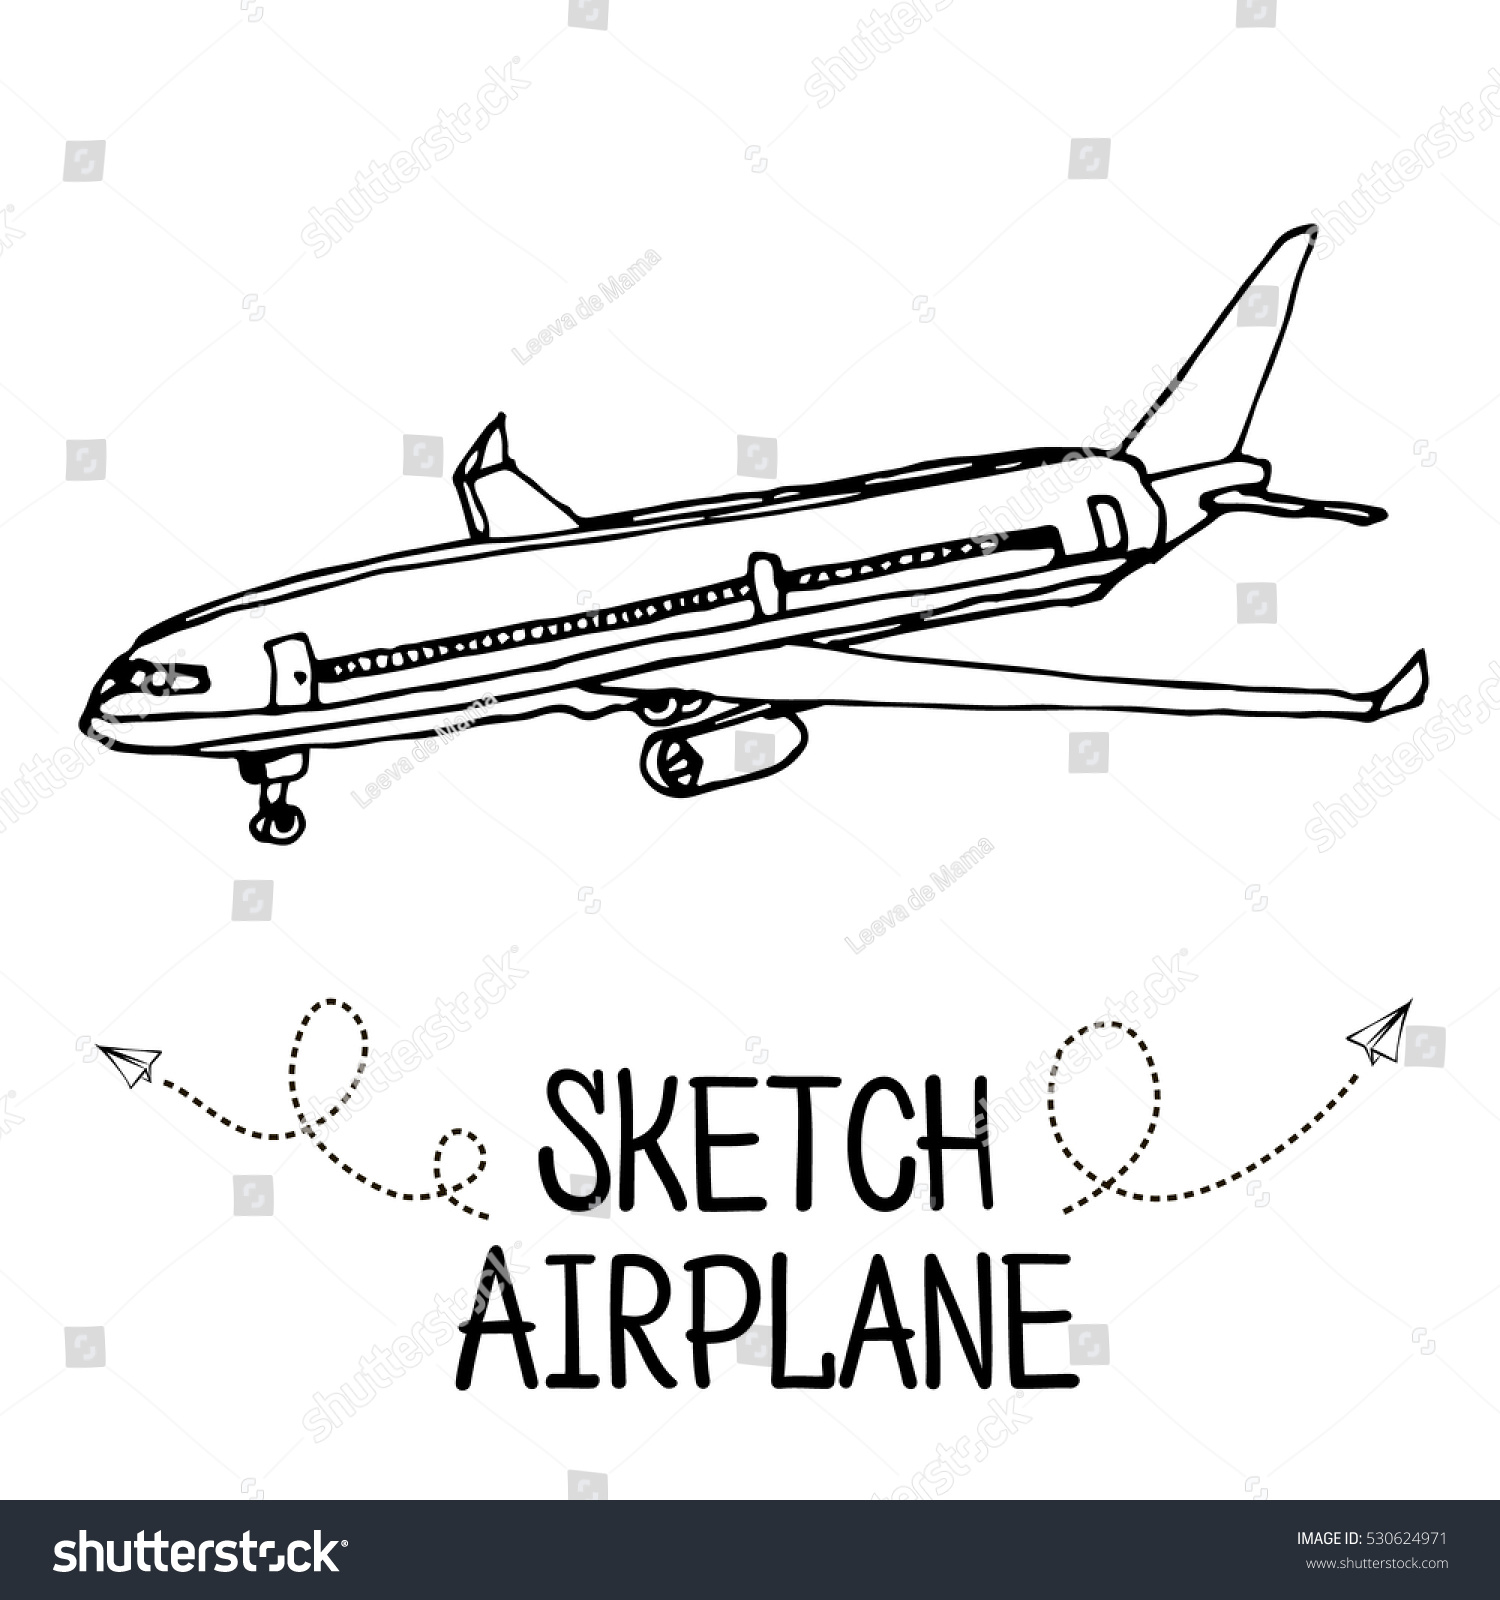 Airplane Hand Draw Sketch Stock Vector 530624971 - Shutterstock